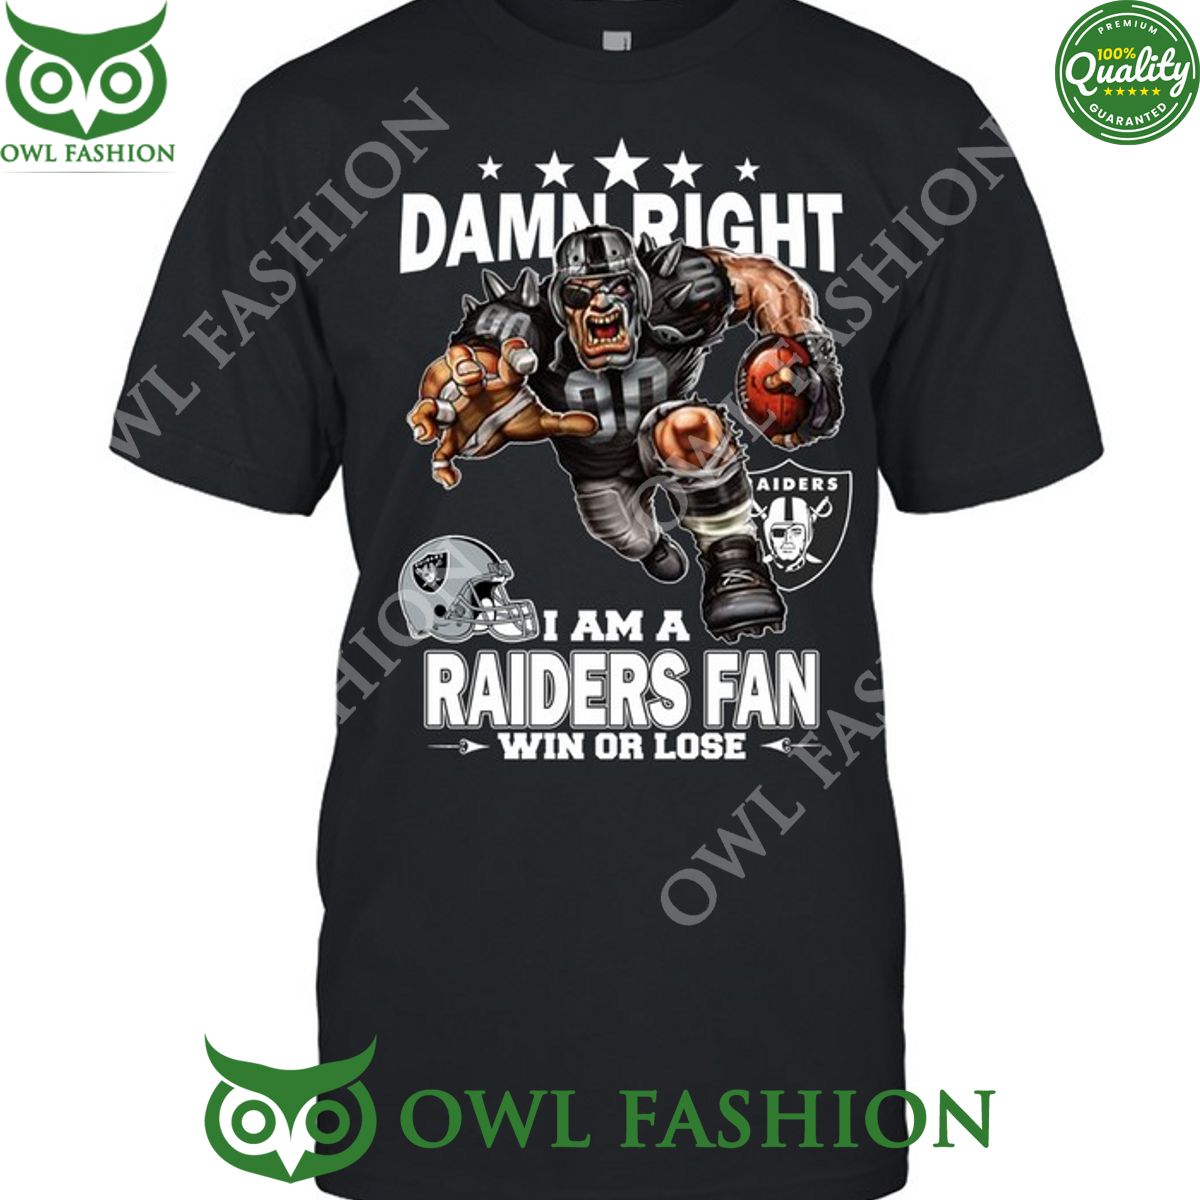 damn right las vegas raiders nfl fan win or lose t shirt 1 02oyB.jpg